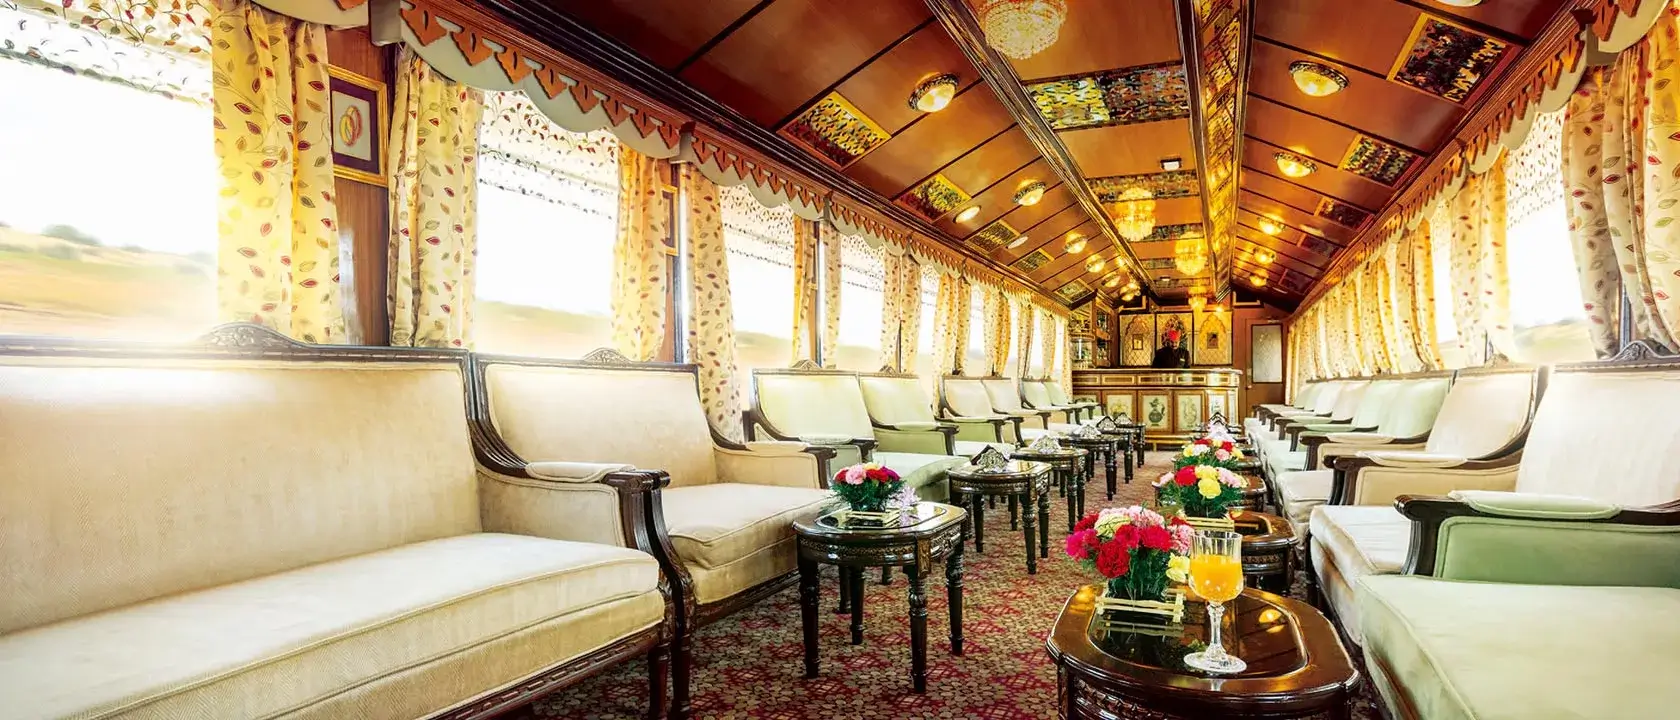 palace-on-wheels-train